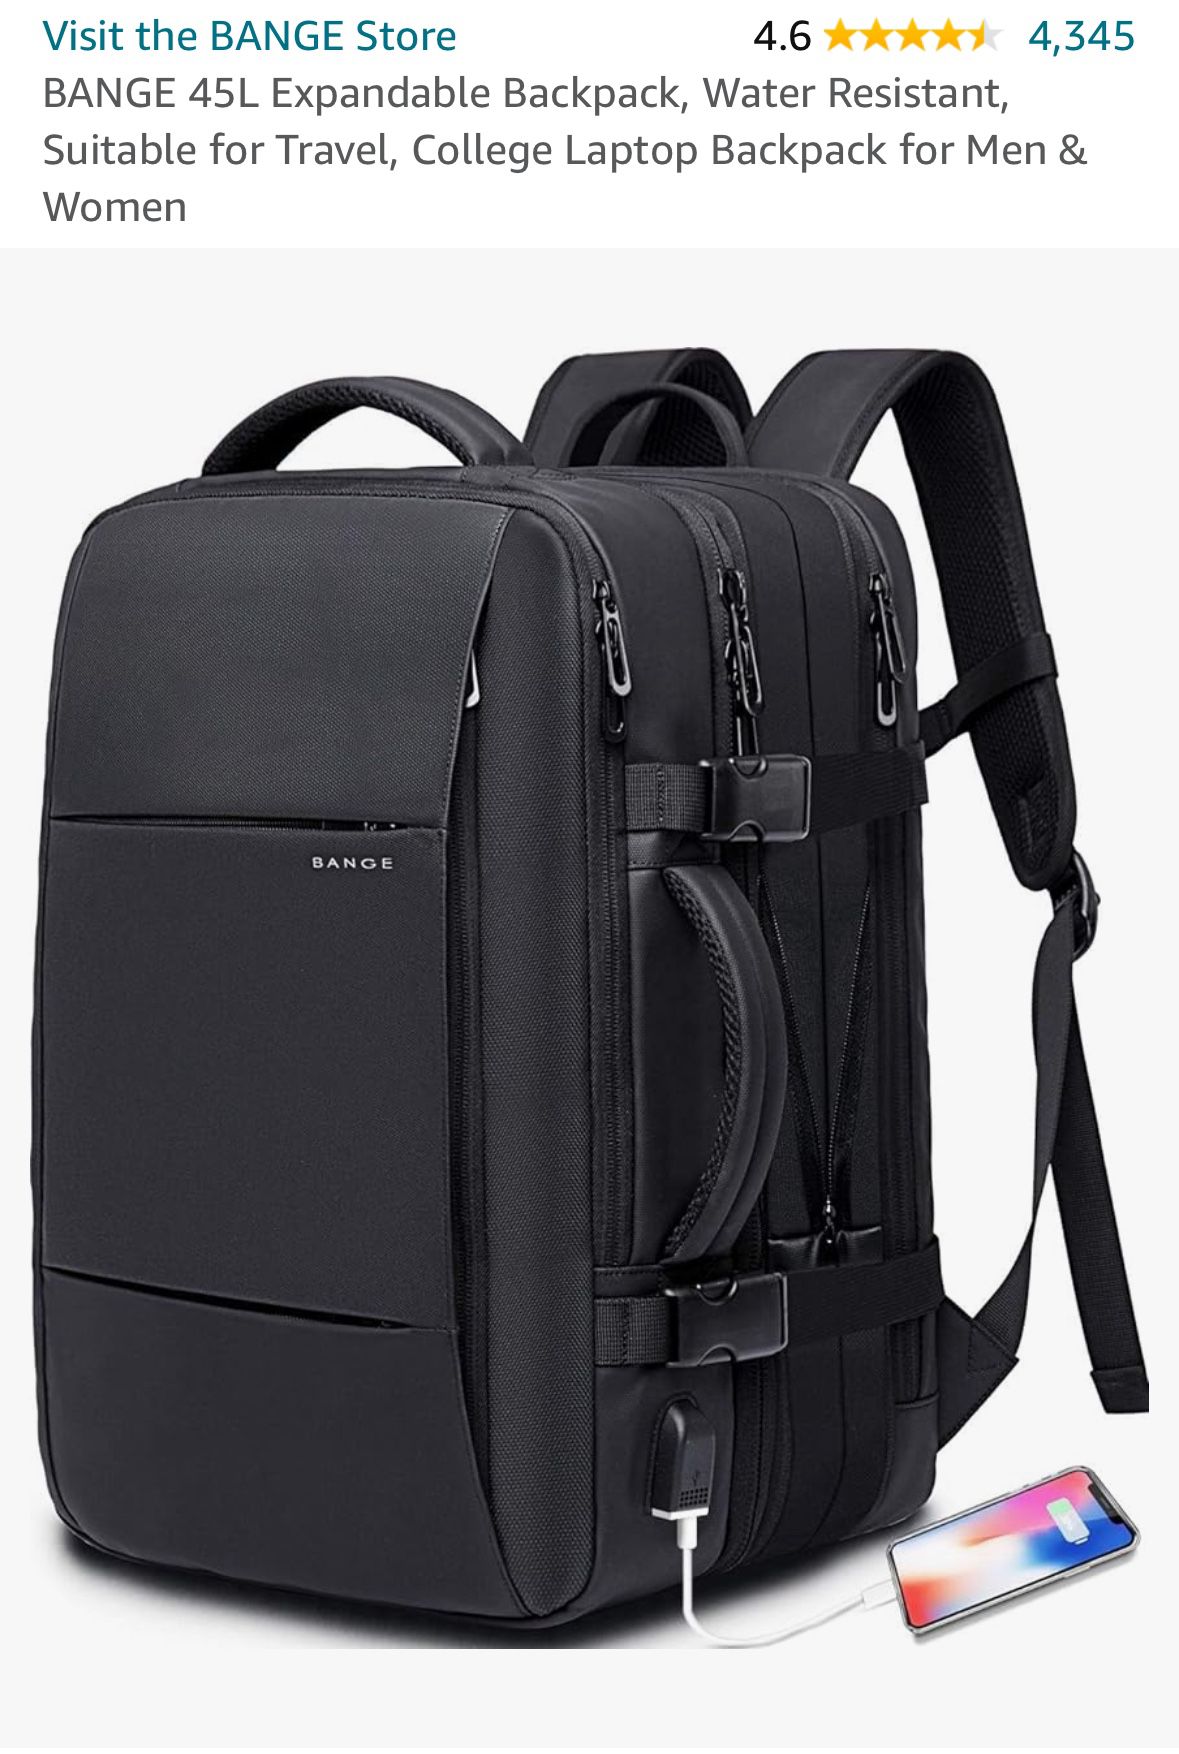 BANGE 45L Expandable Backpack